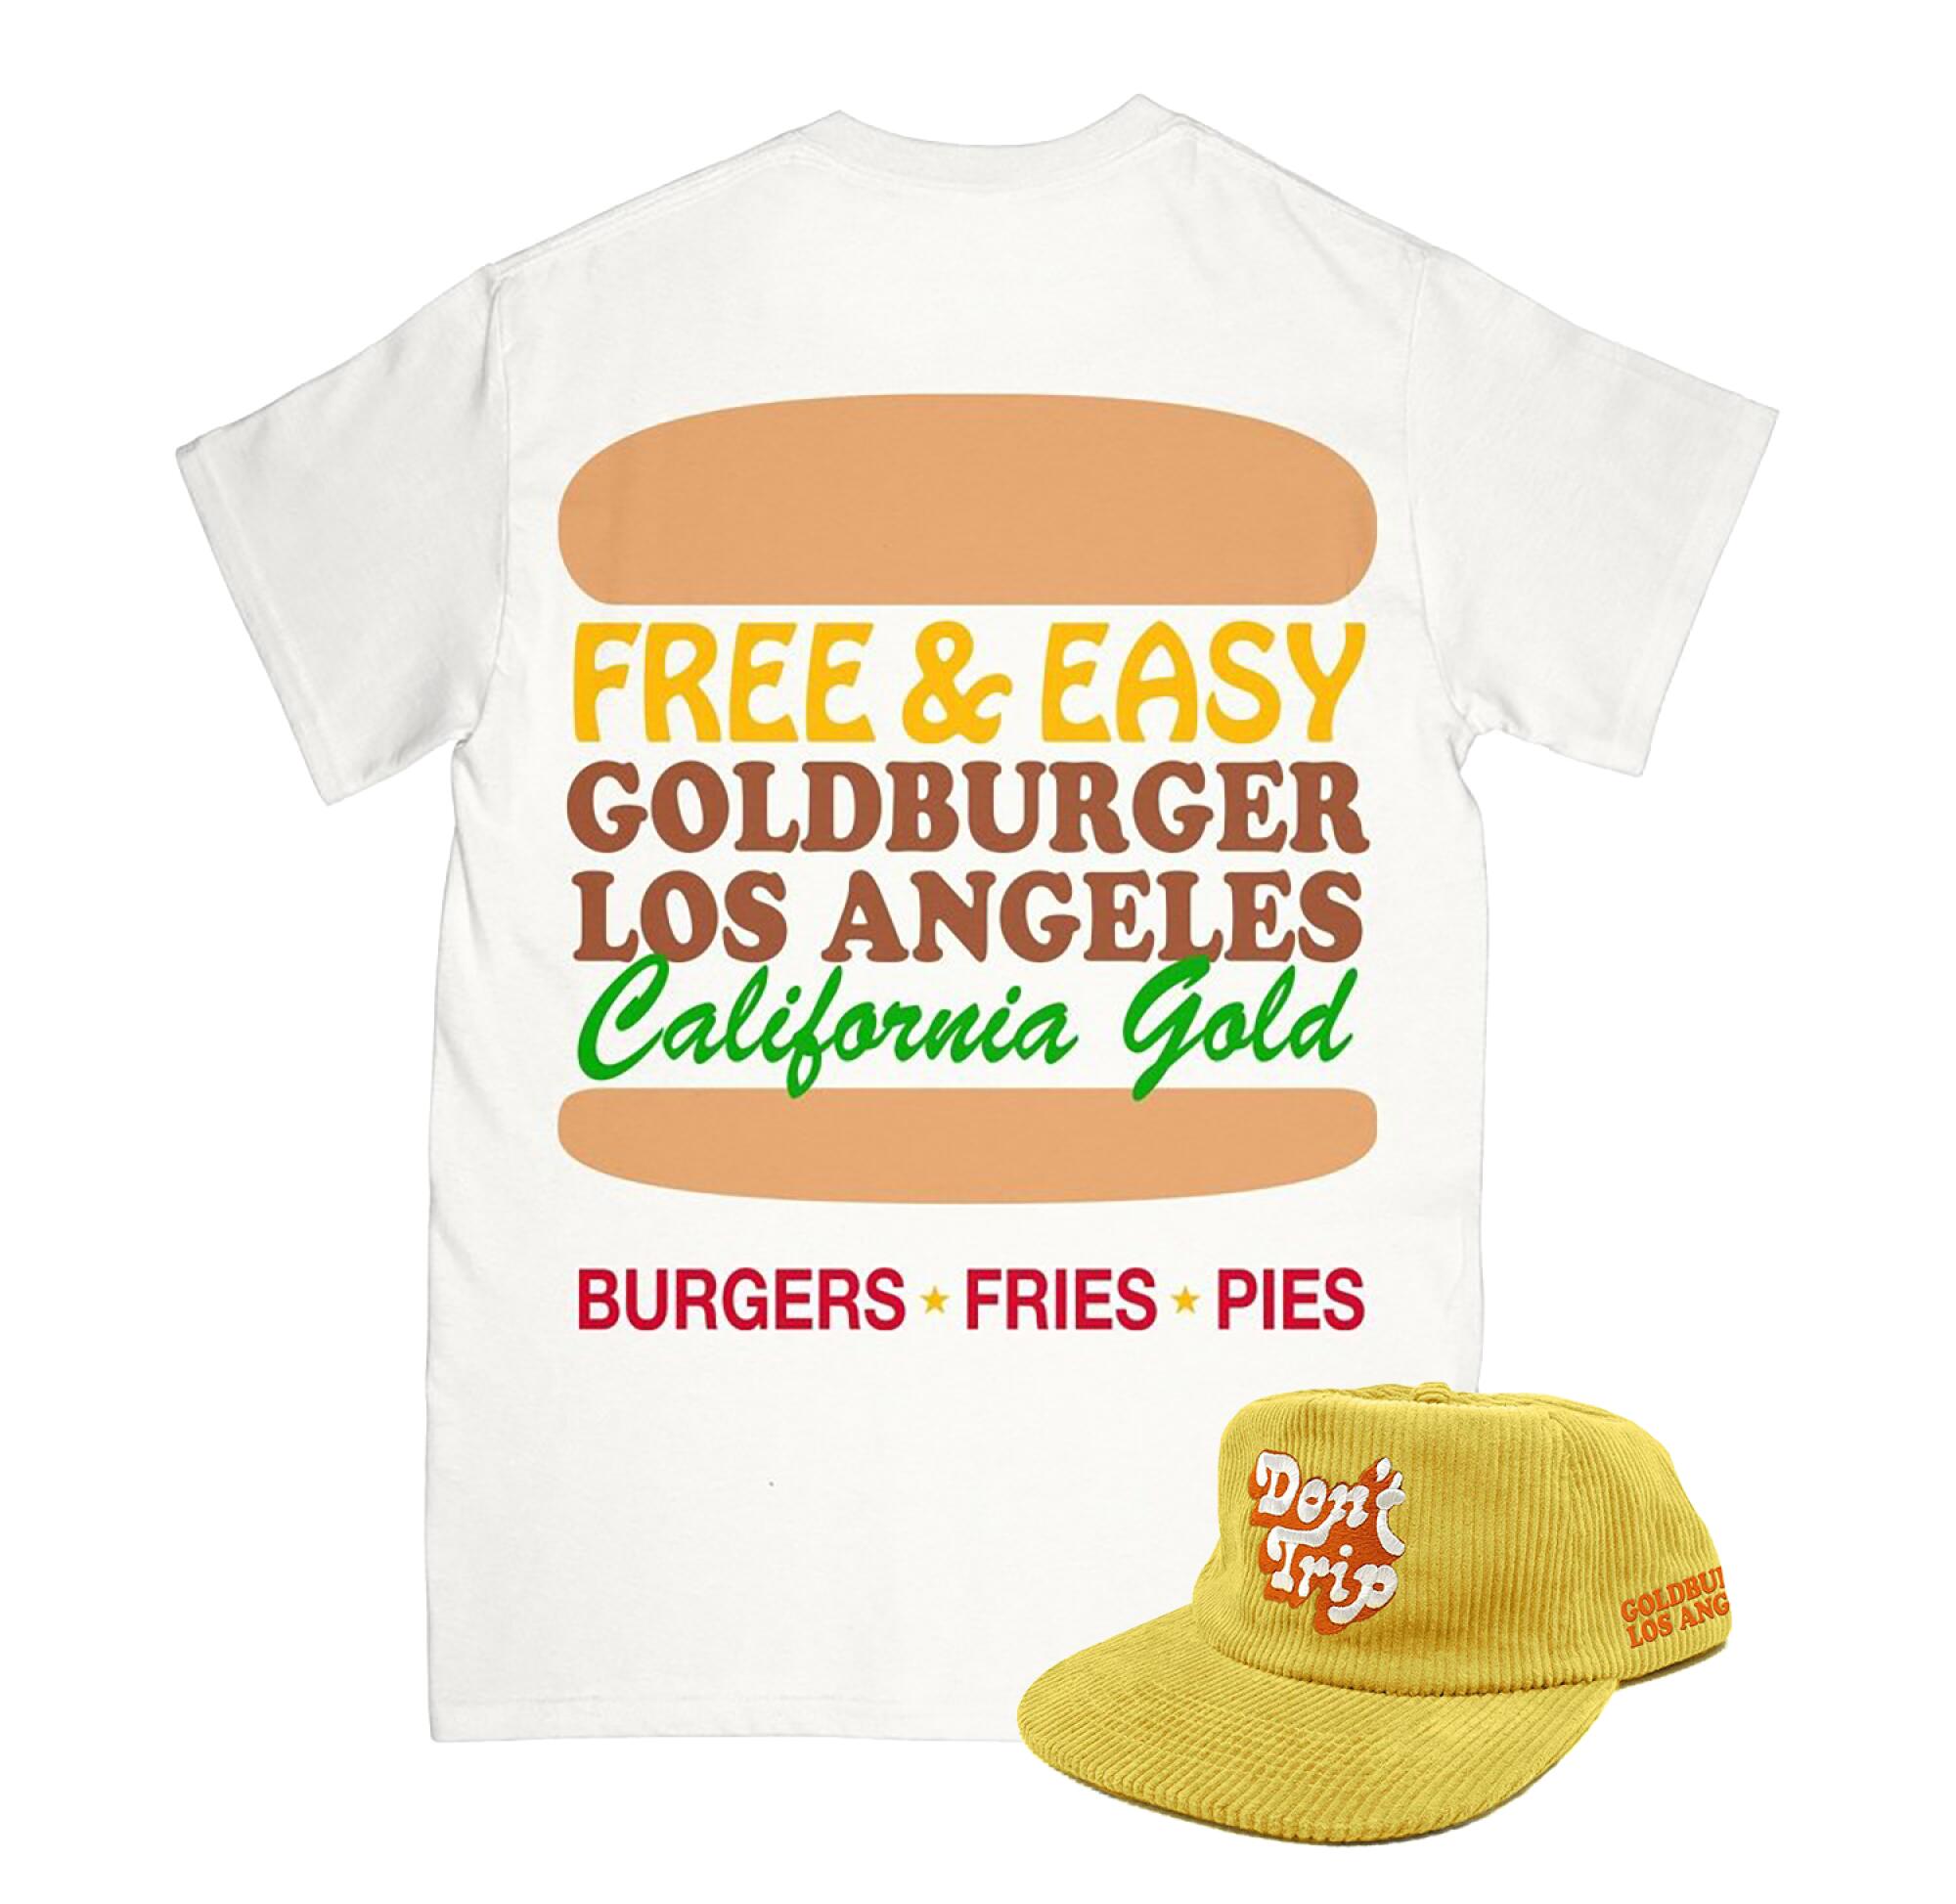 Goldburger X Free & Easy shirt with two burger buns